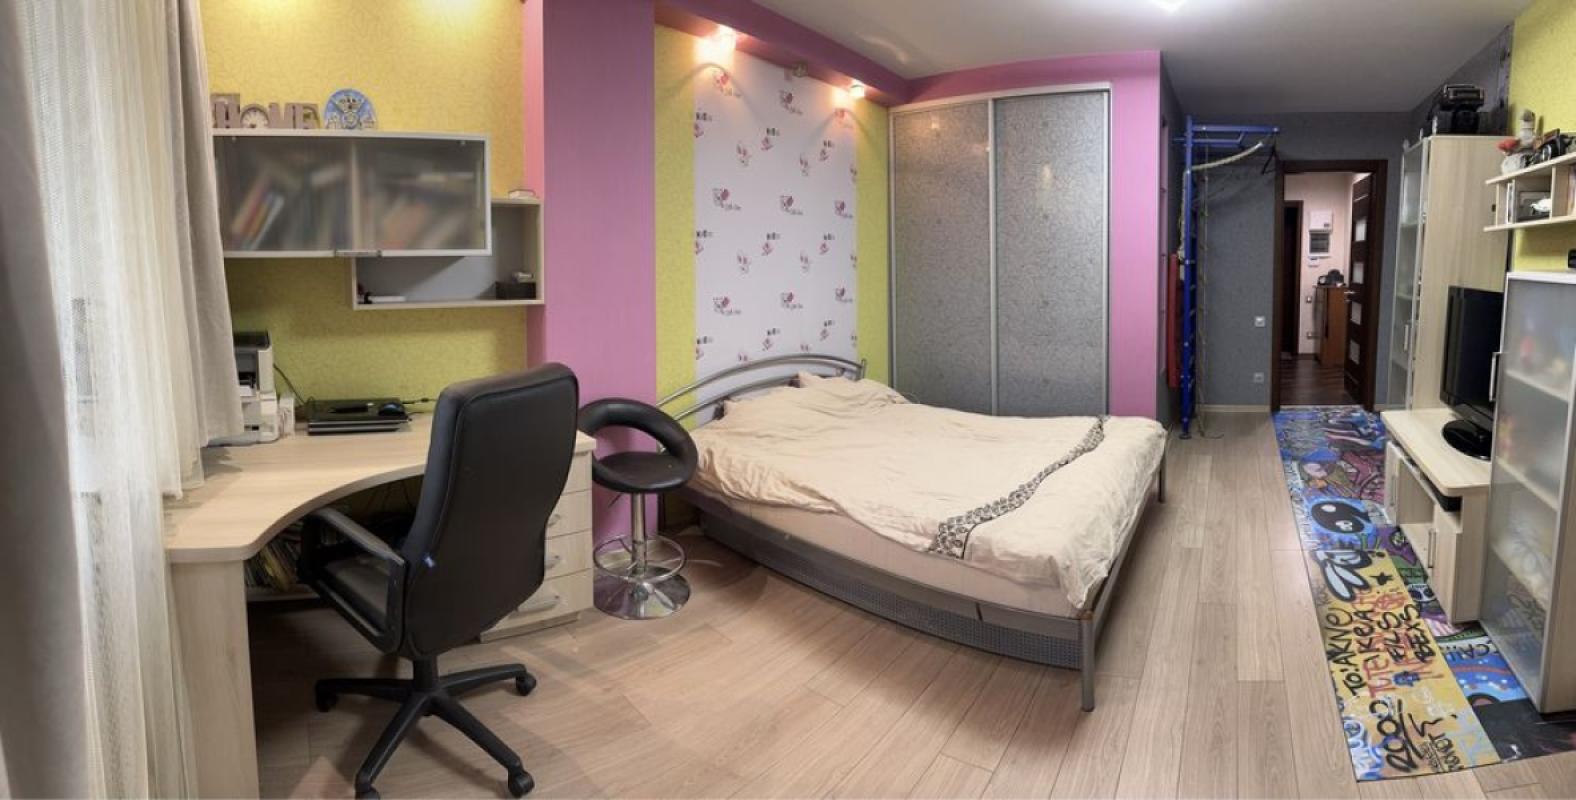 Sale 3 bedroom-(s) apartment 113 sq. m., Hvardiytsiv-Shyronintsiv Street 27